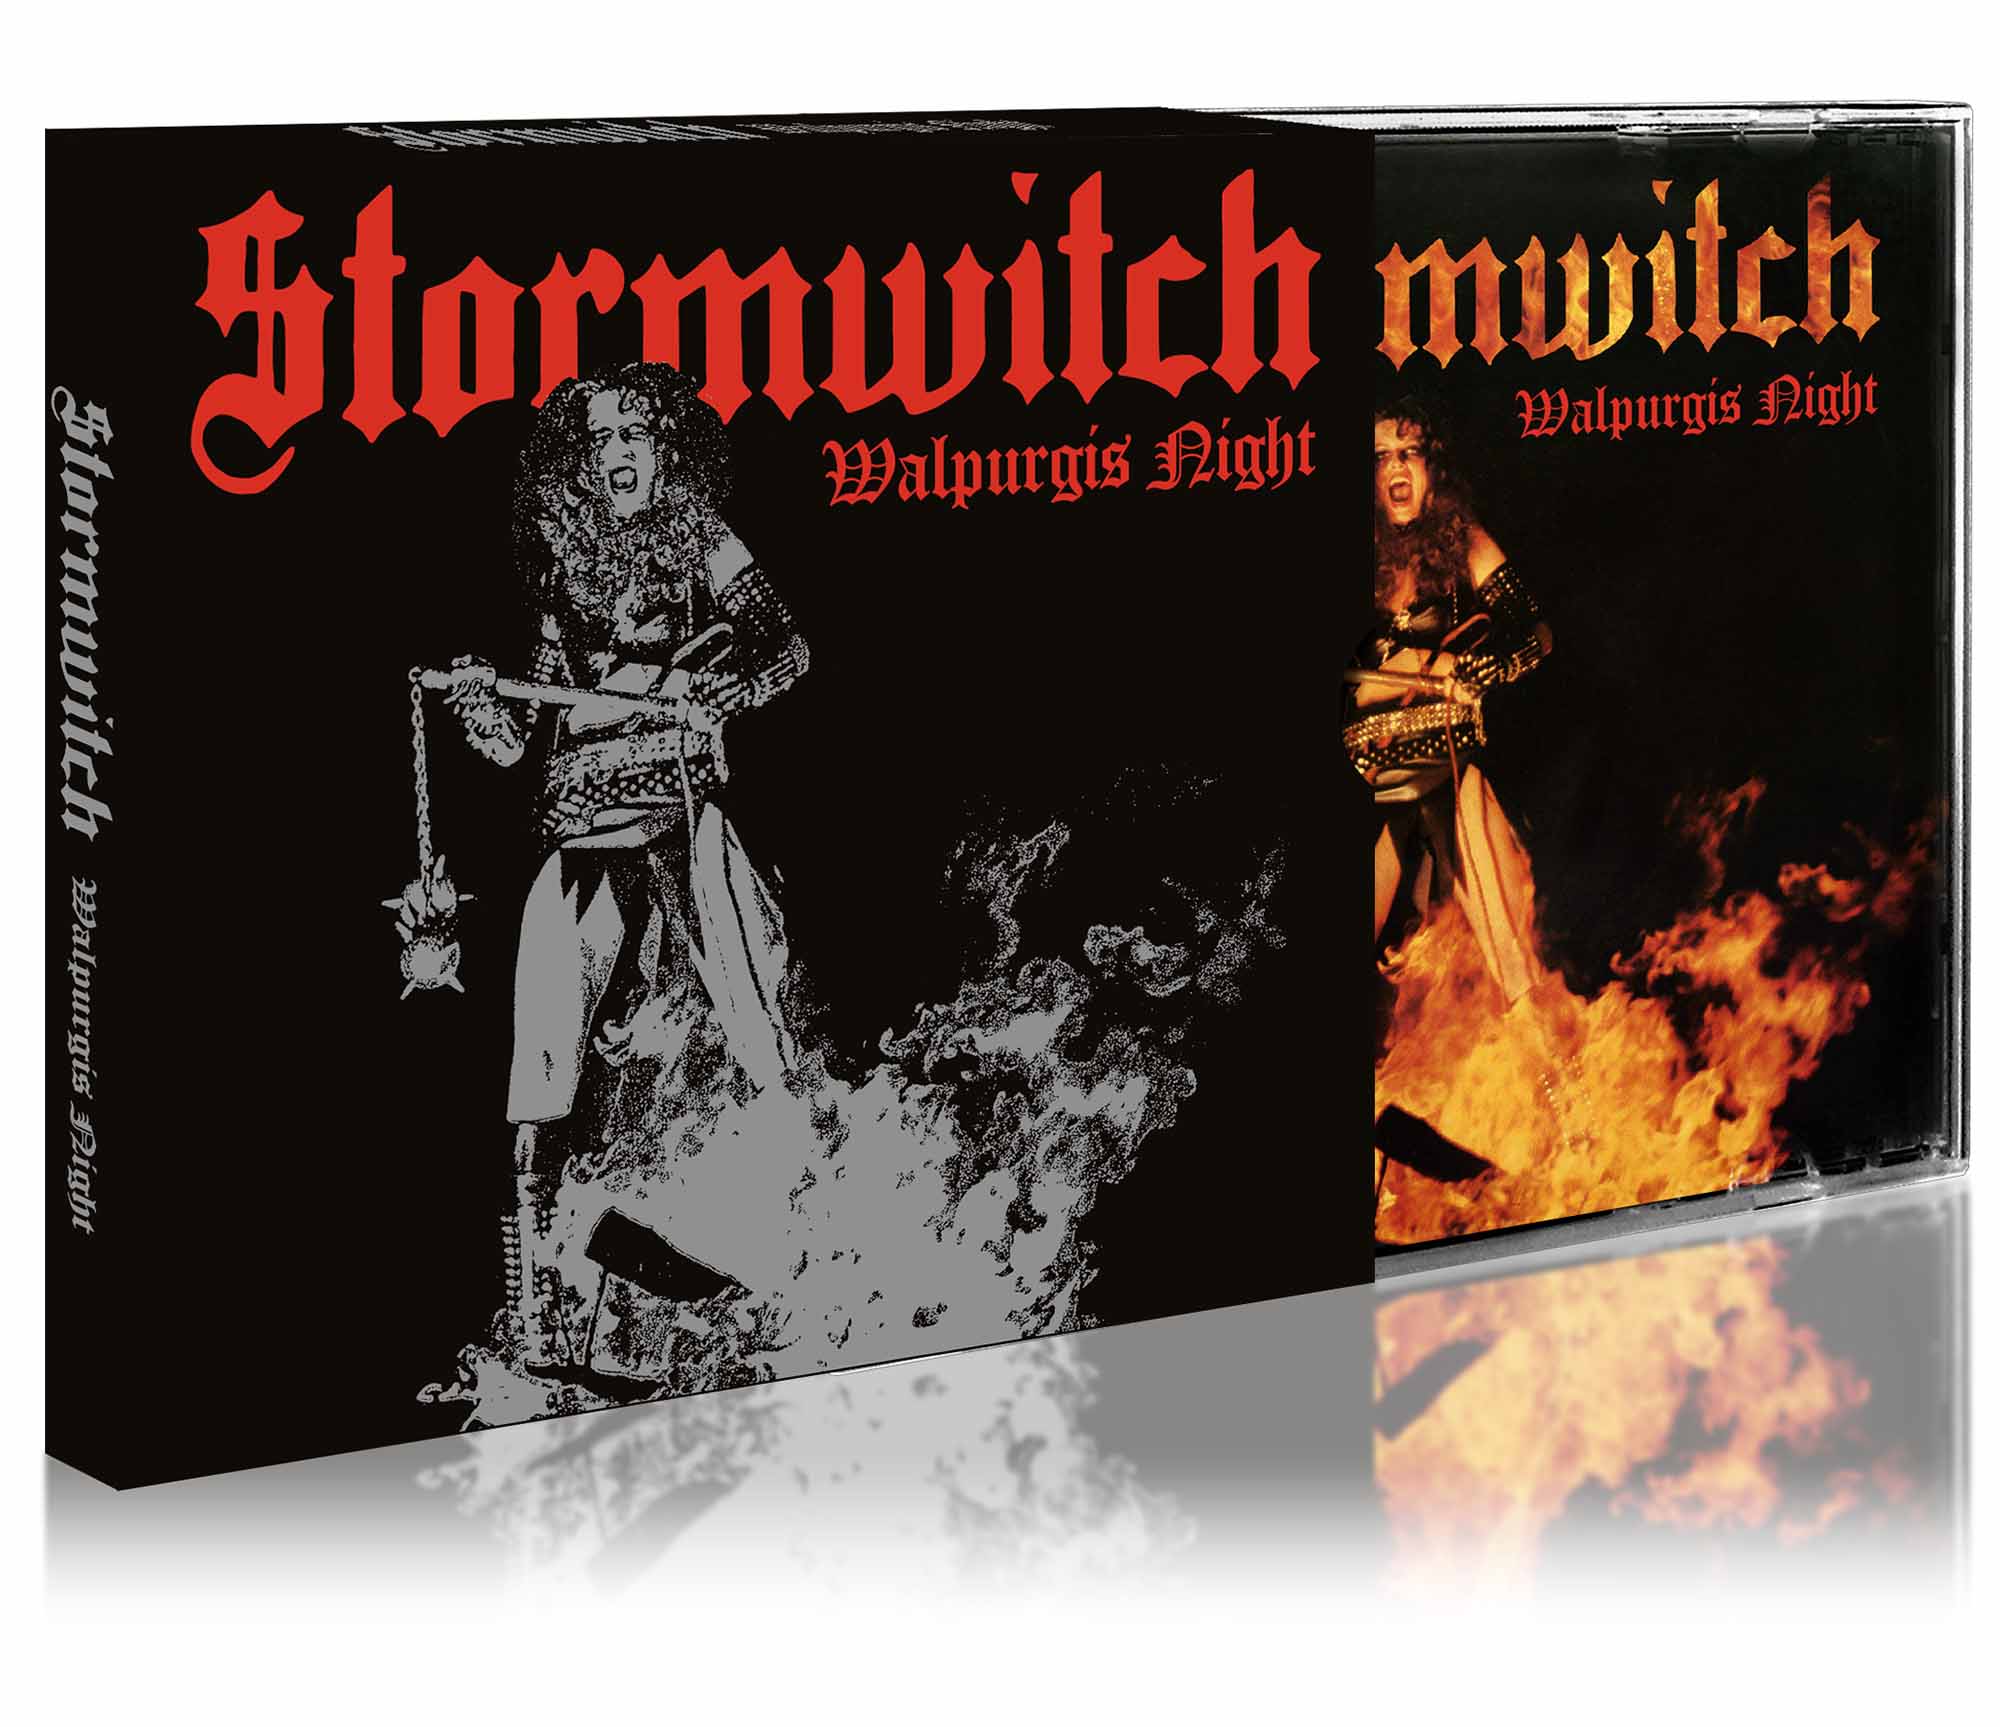 STORMWITCH - Walpurgis Night  CD